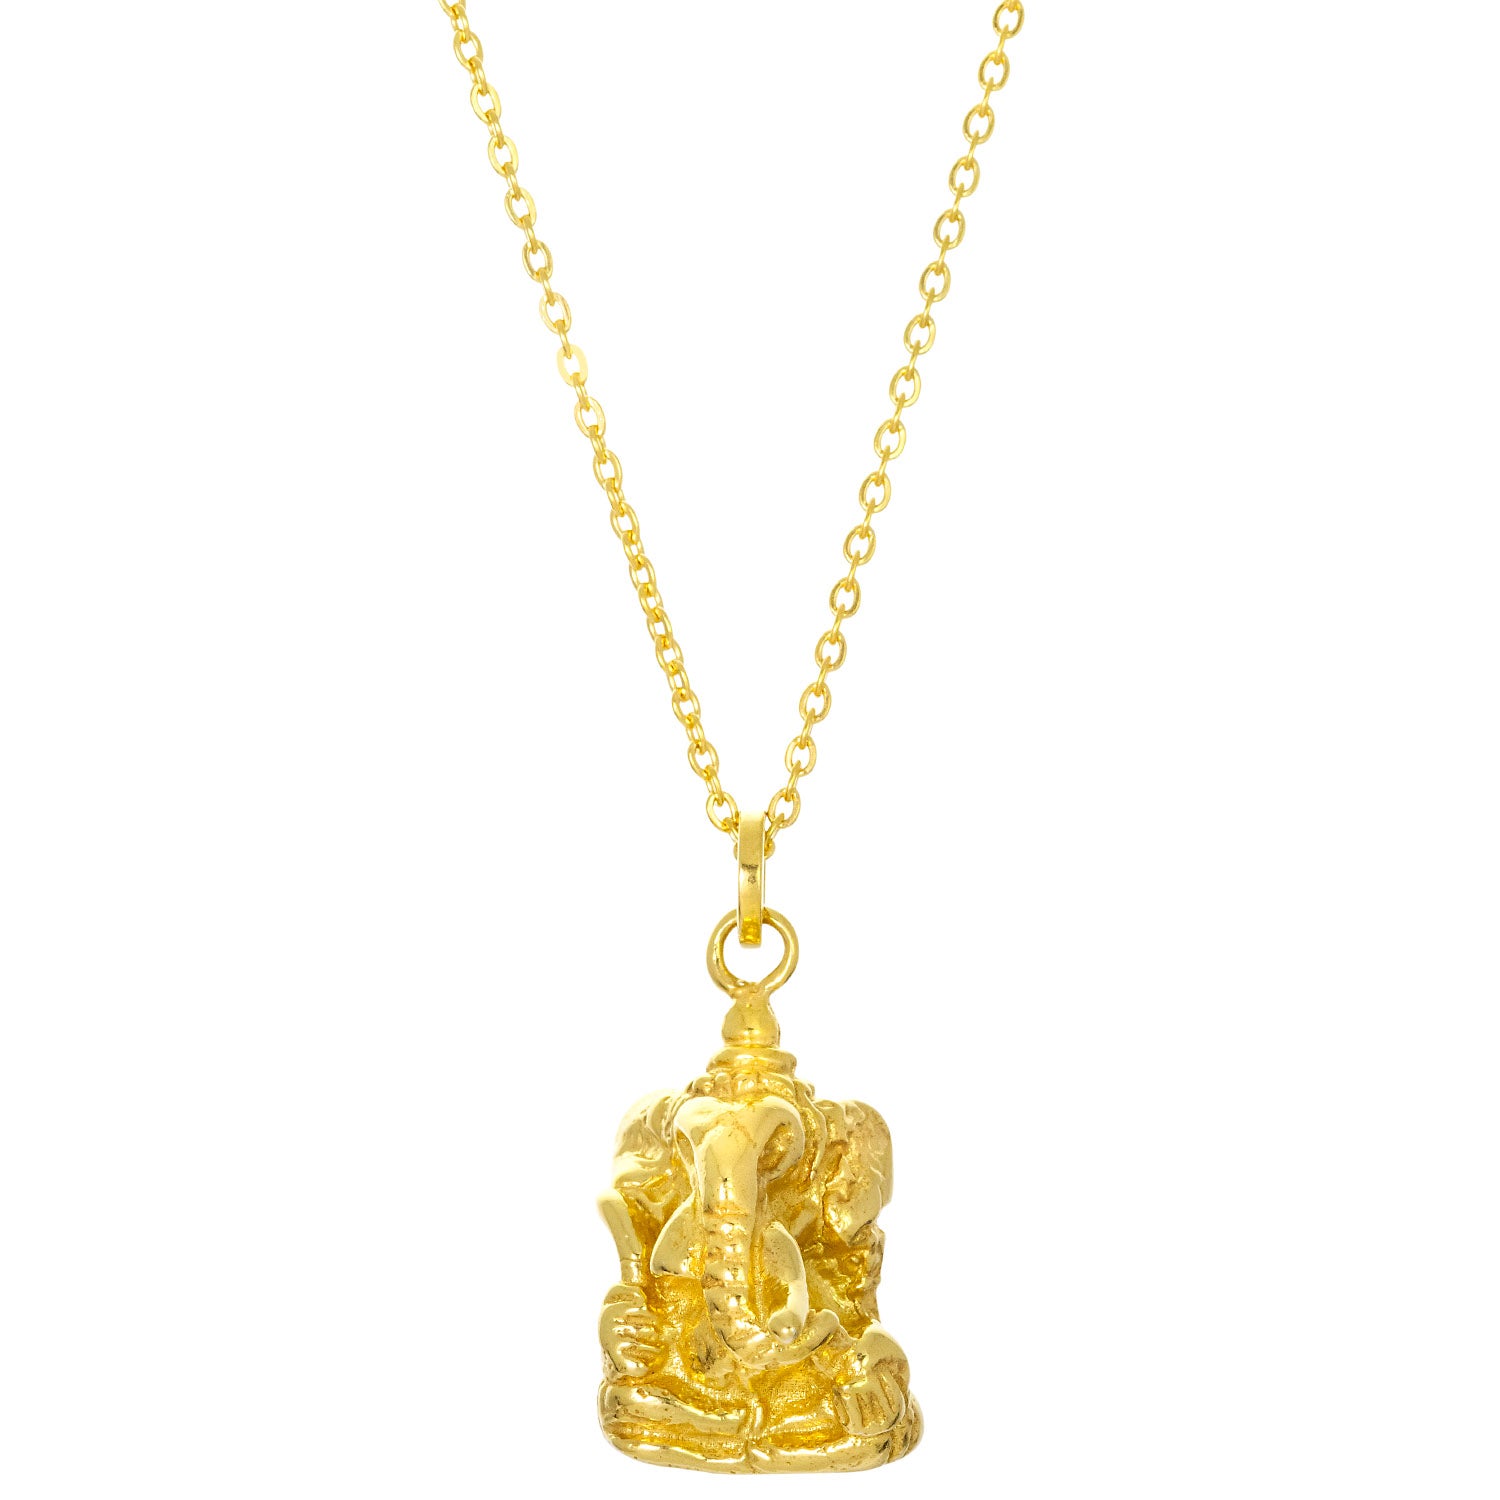 Antiker Ganesha Anhänger vergoldet von ETERNAL BLISS - Spiritueller Schmuck